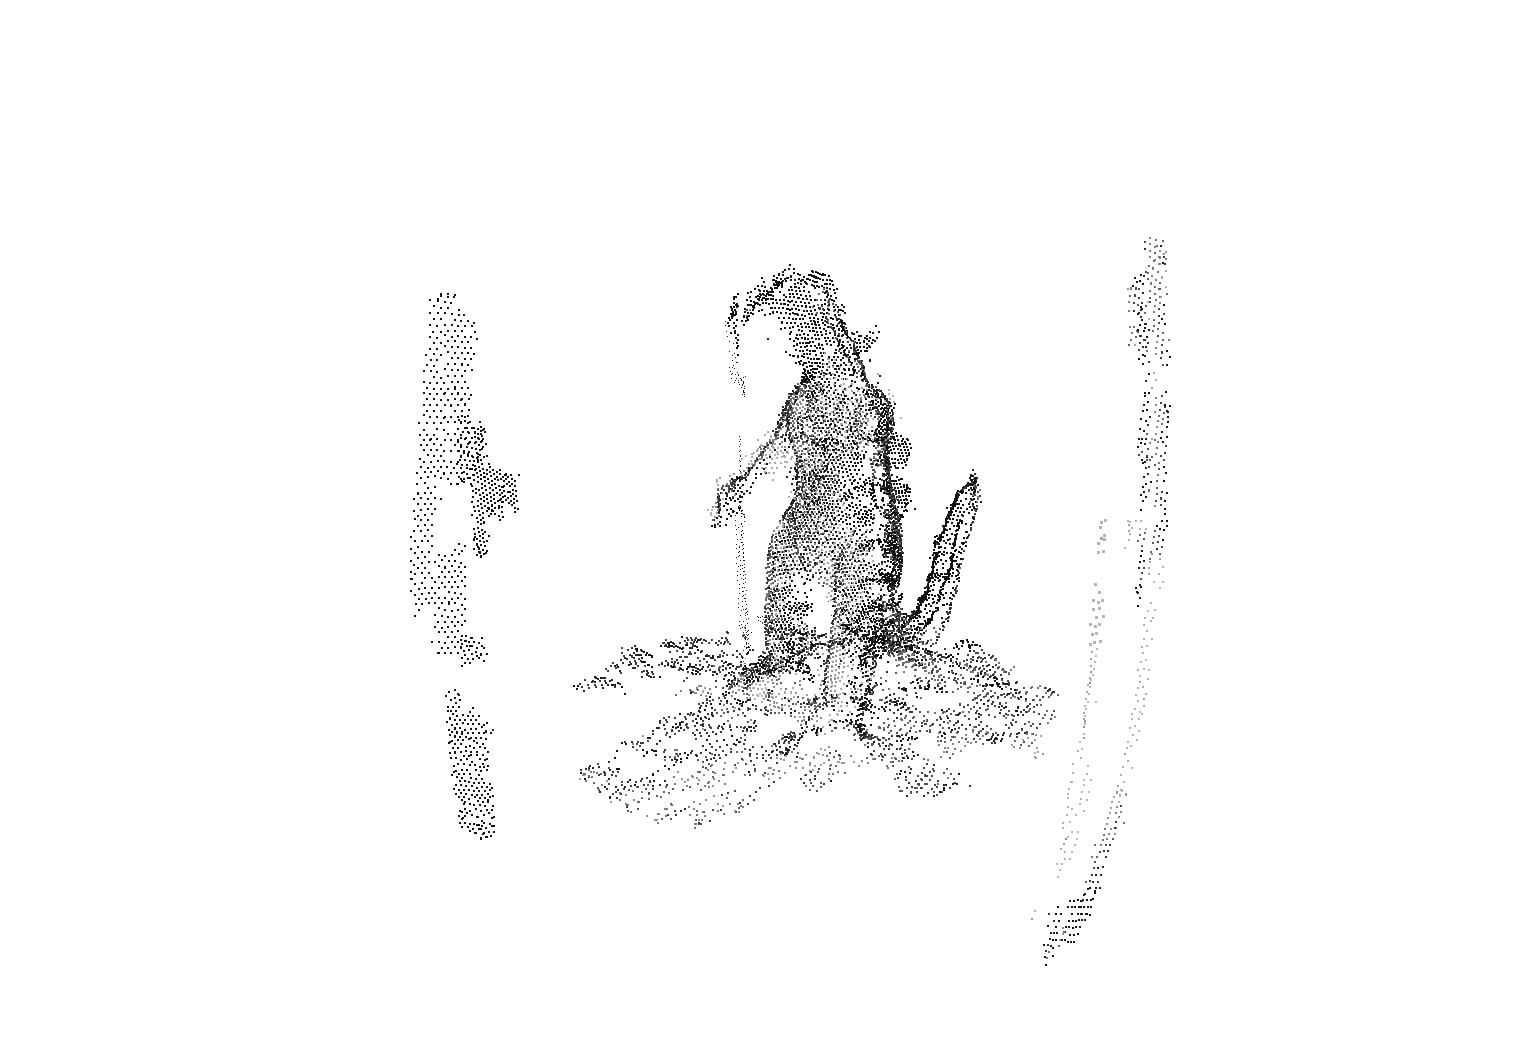 Oxford Dinosaur: VisualSFM